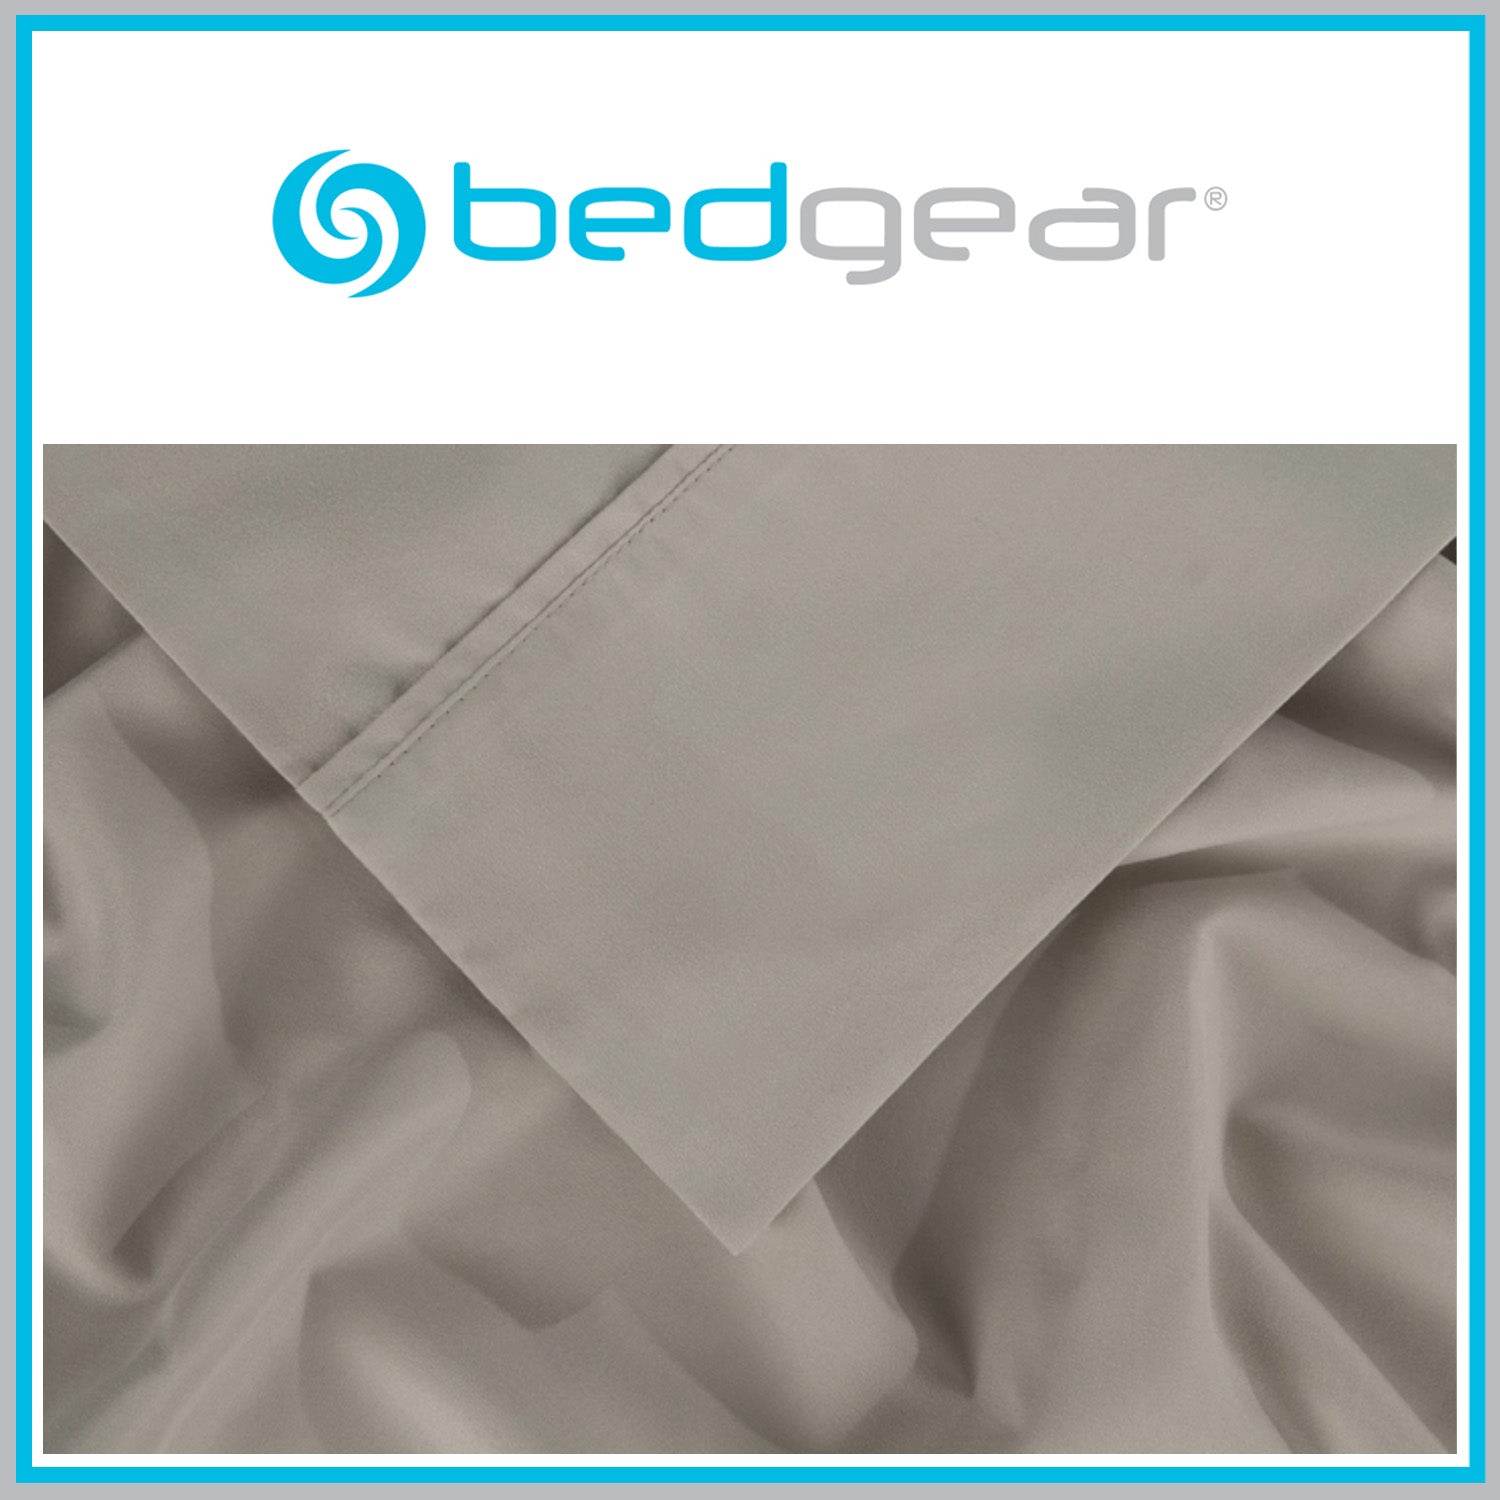 Bedgear Basic Sheet Set